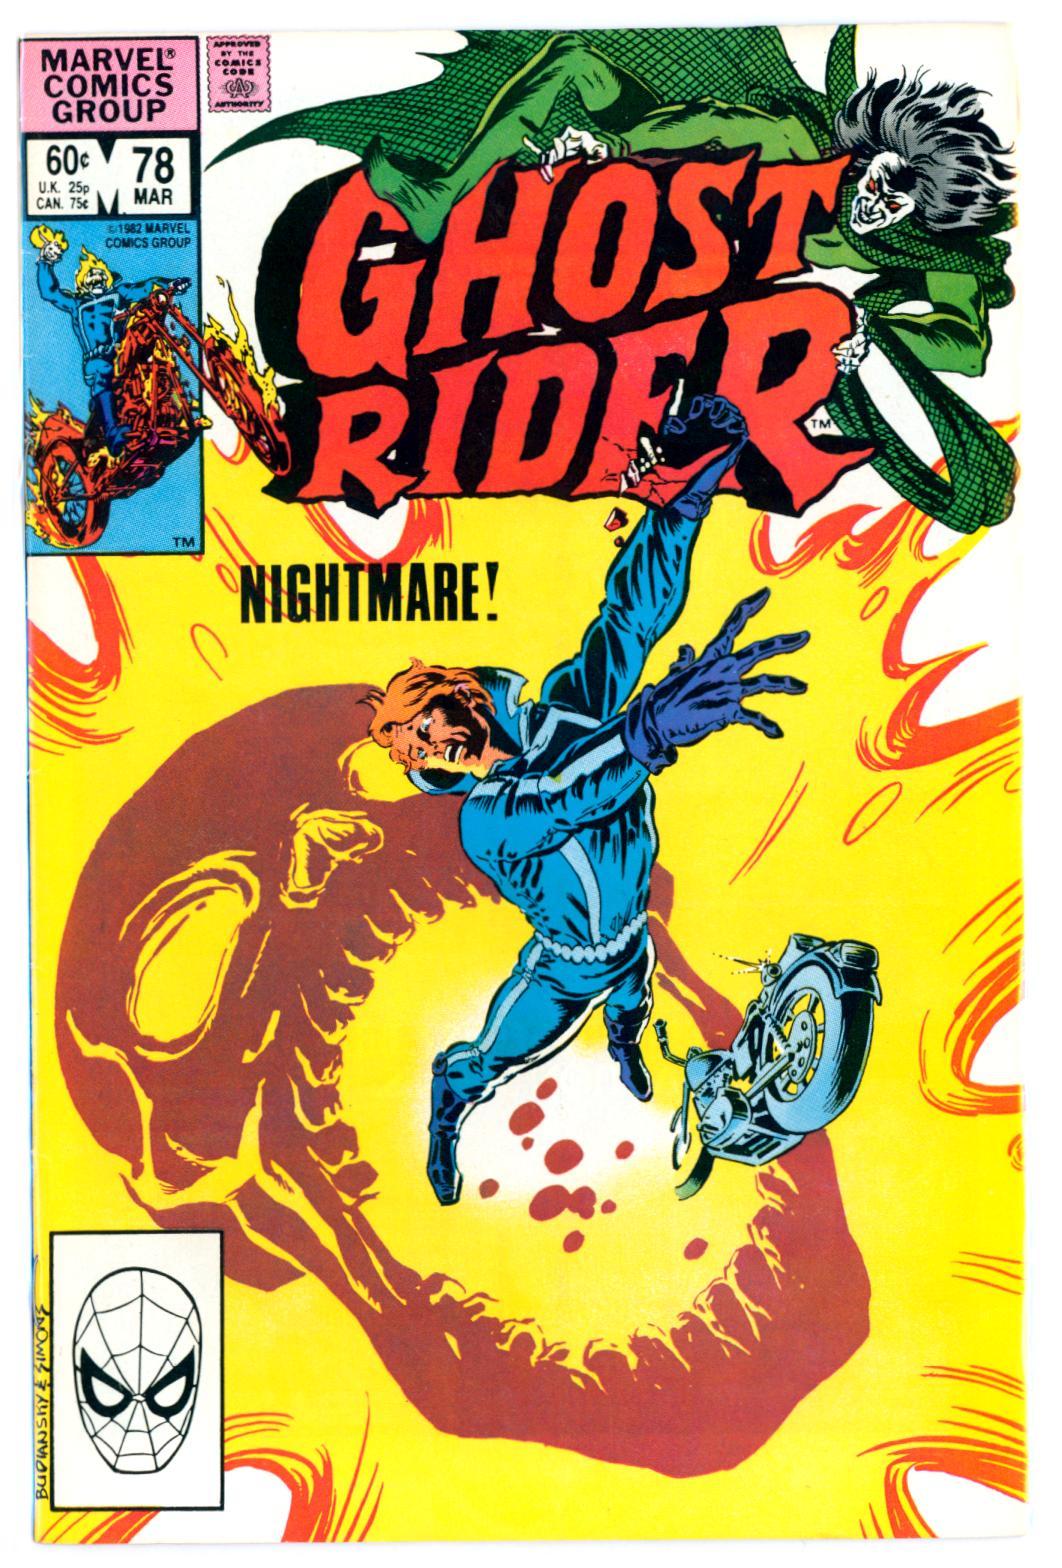 Ghost Rider #78